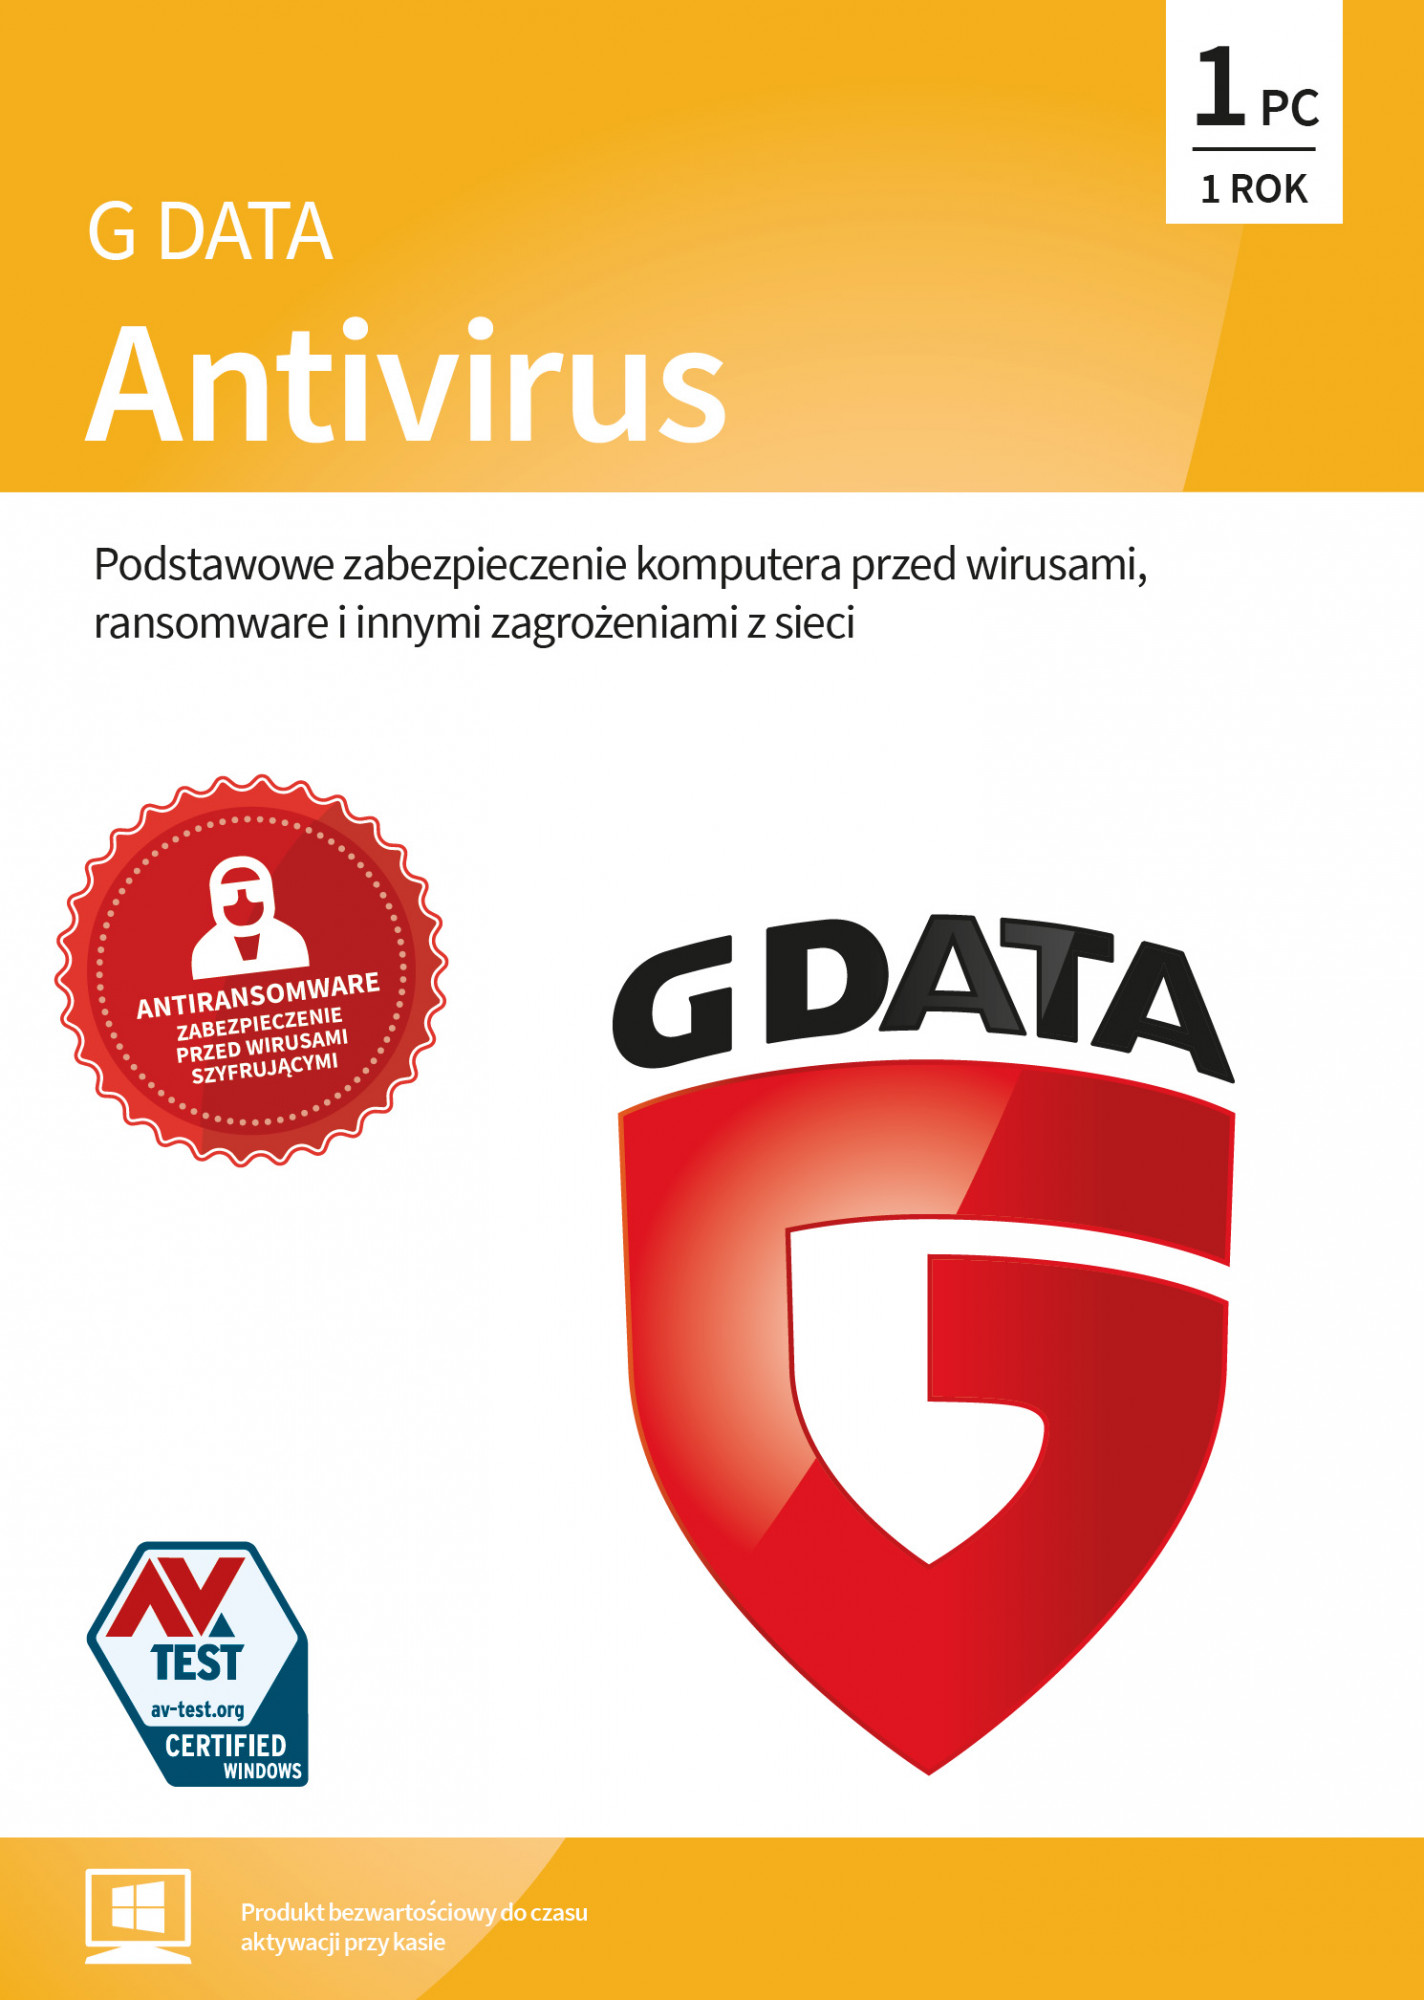 g data antivirus le cracke gratuit